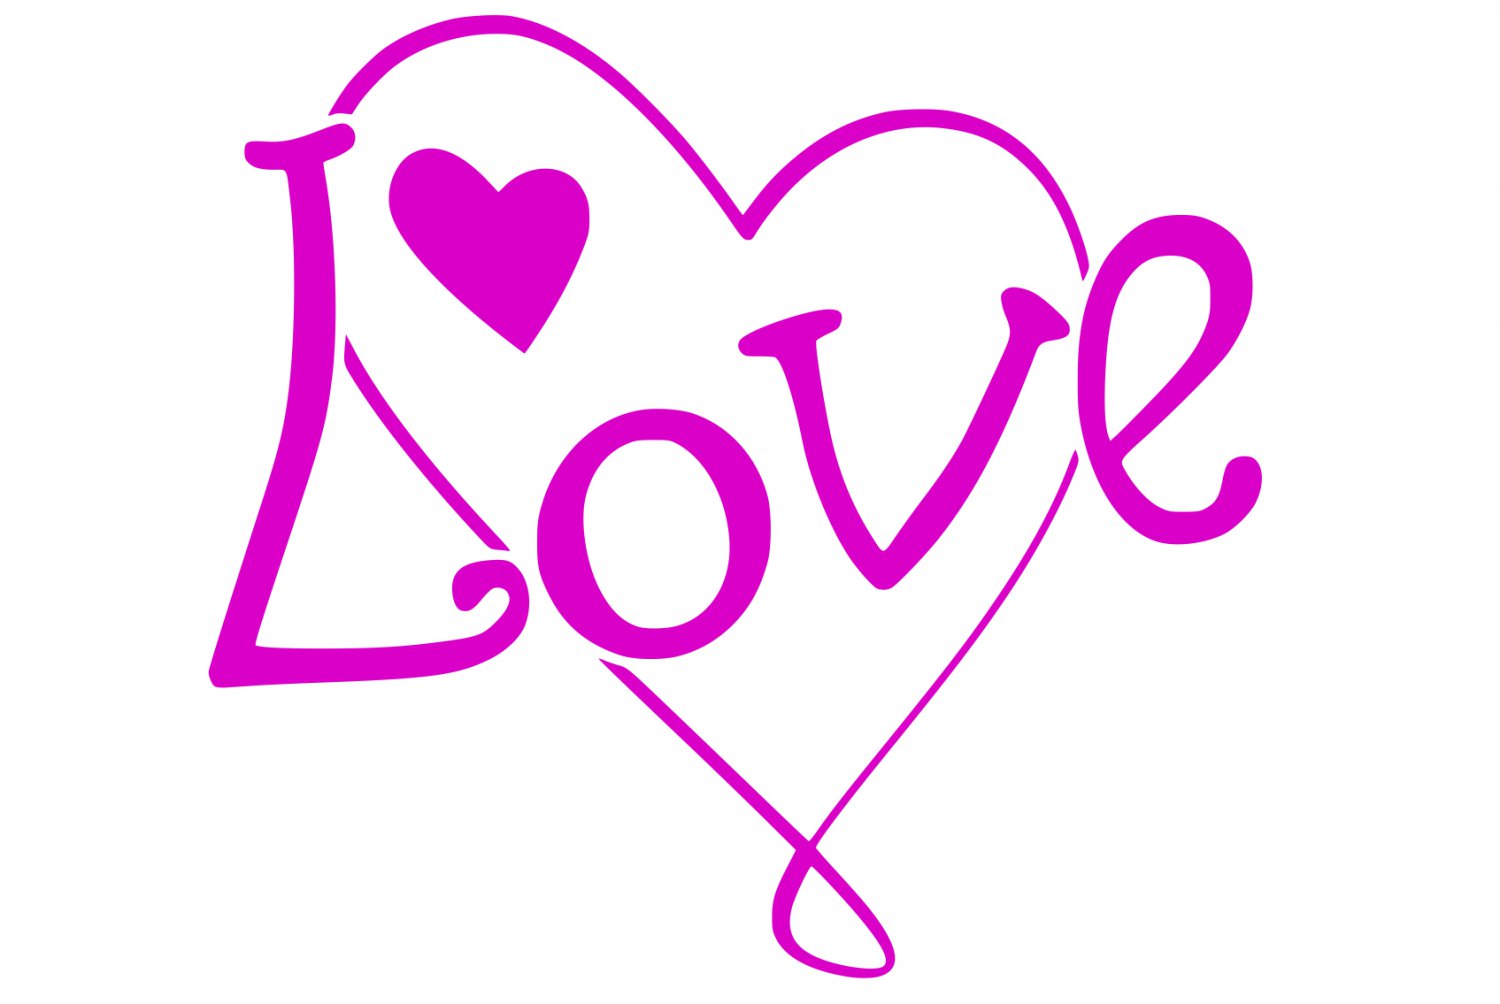 Download Free SVG Cut File - Leopard Love Heart SVG Cut File - Special Hear...